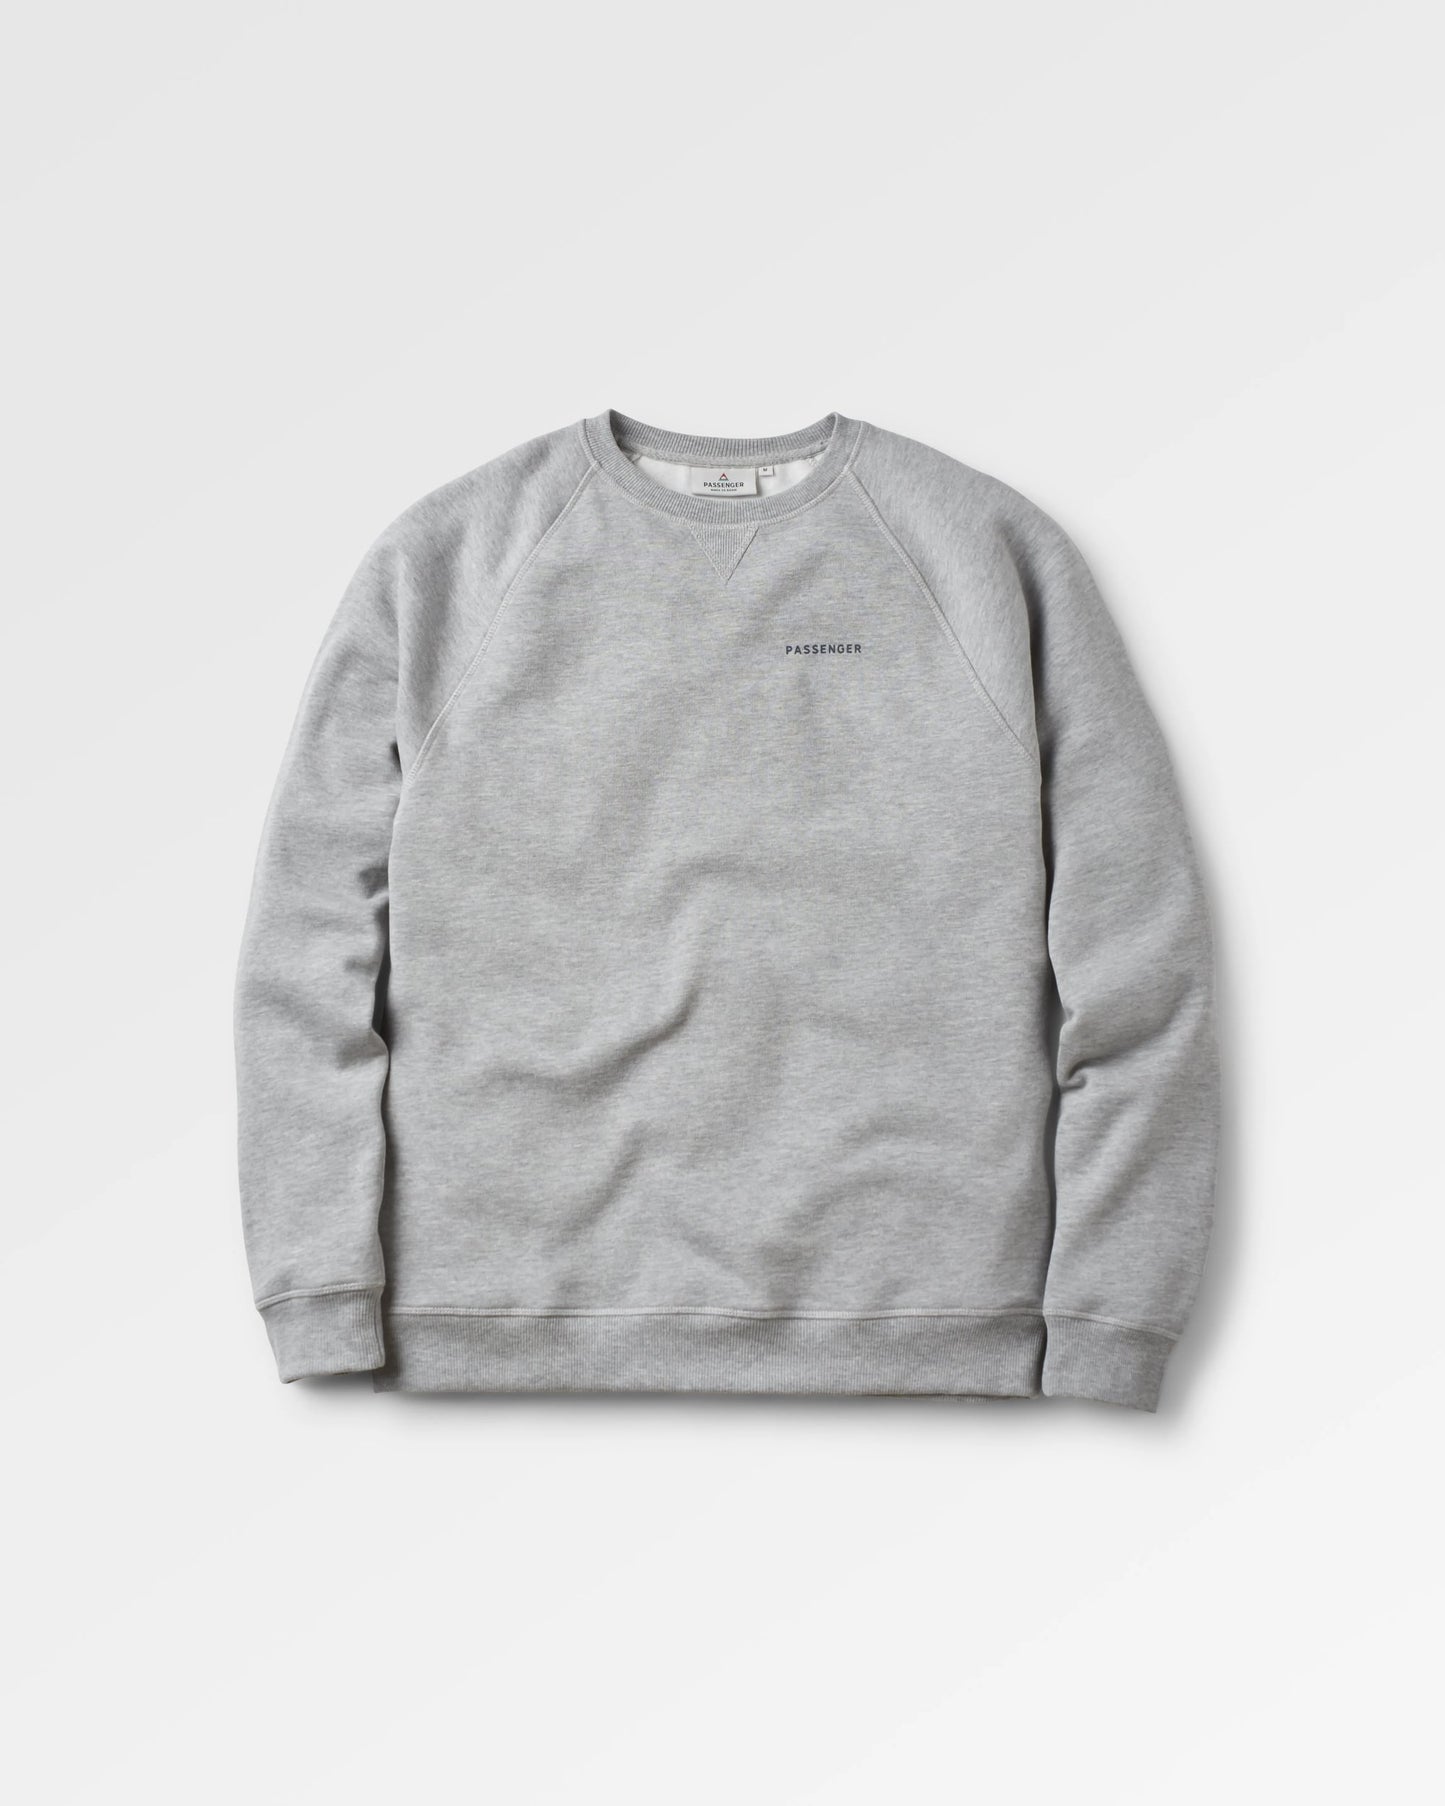 Made To Roam Sweatshirt - Grey Marl